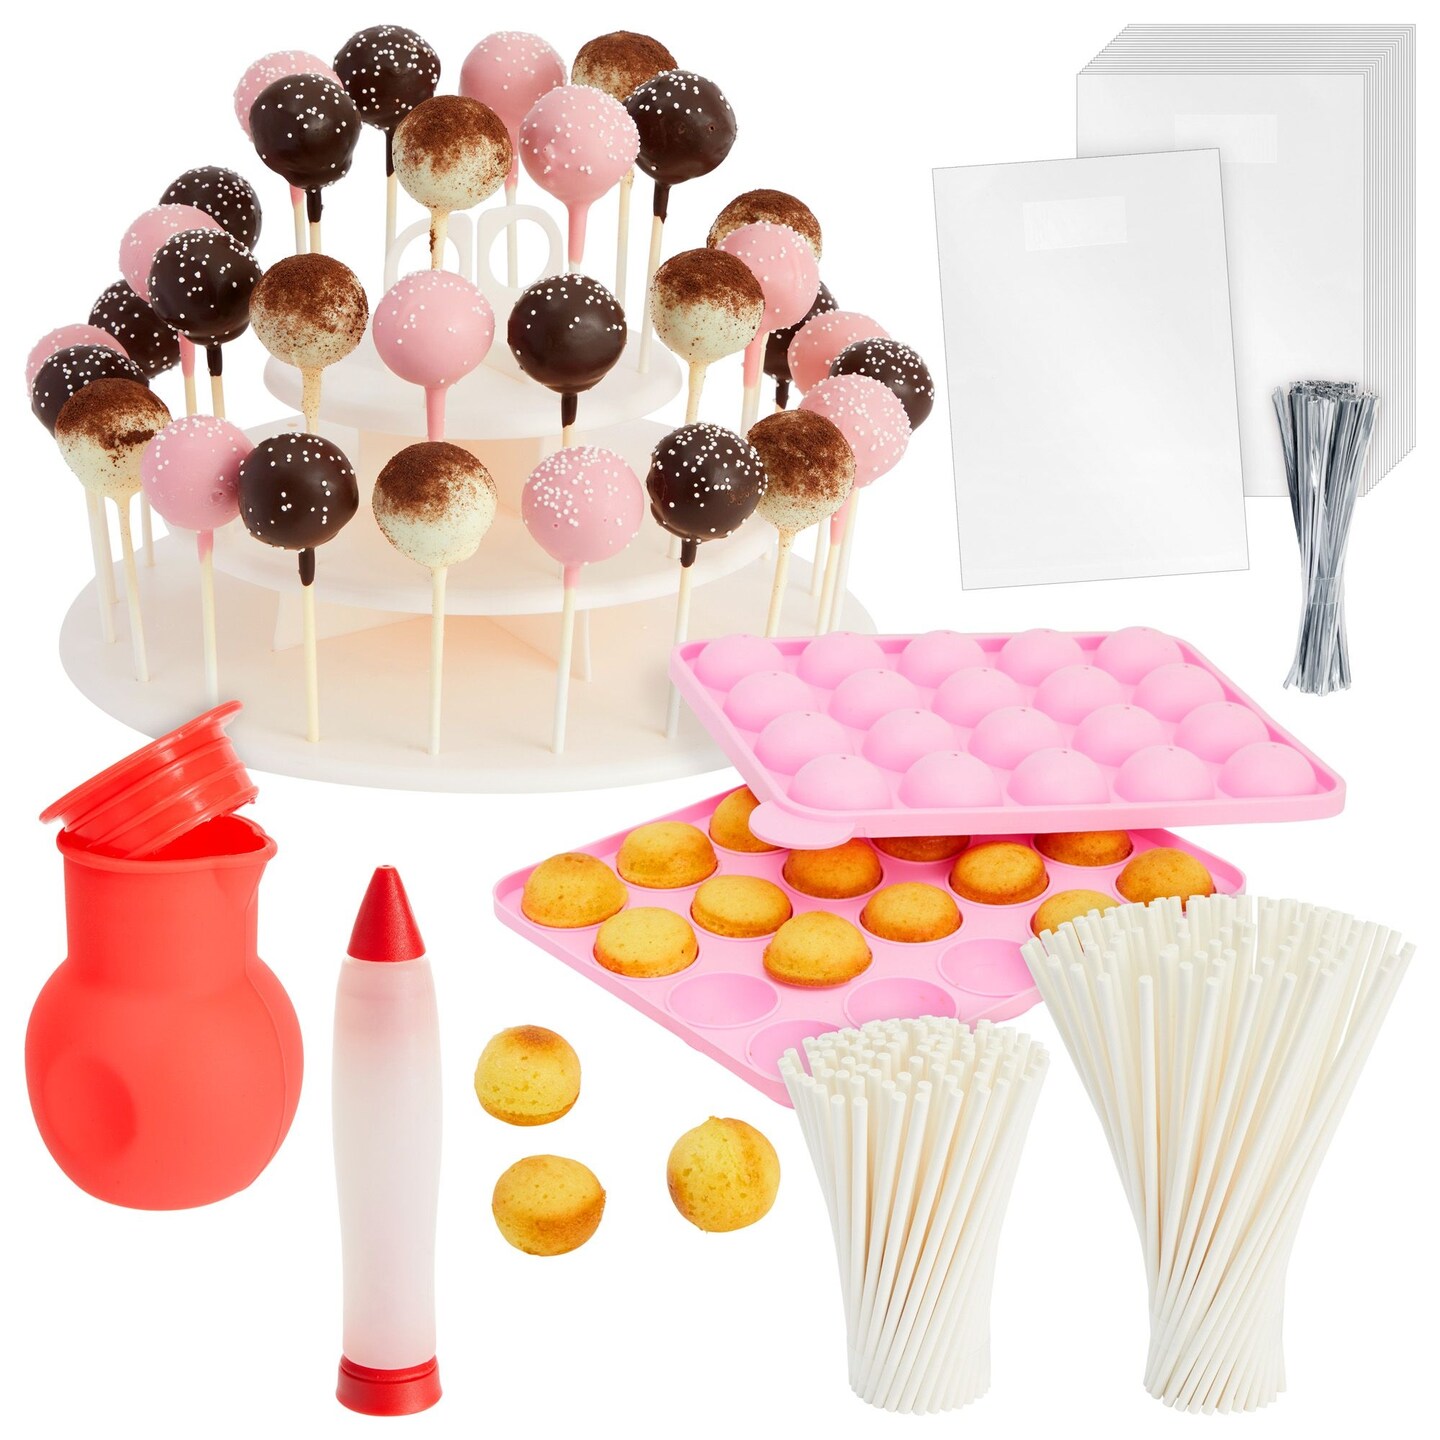 200 Pieces Acrylic Lollipop Sticks Cake Pops Sticks Candy Sticks